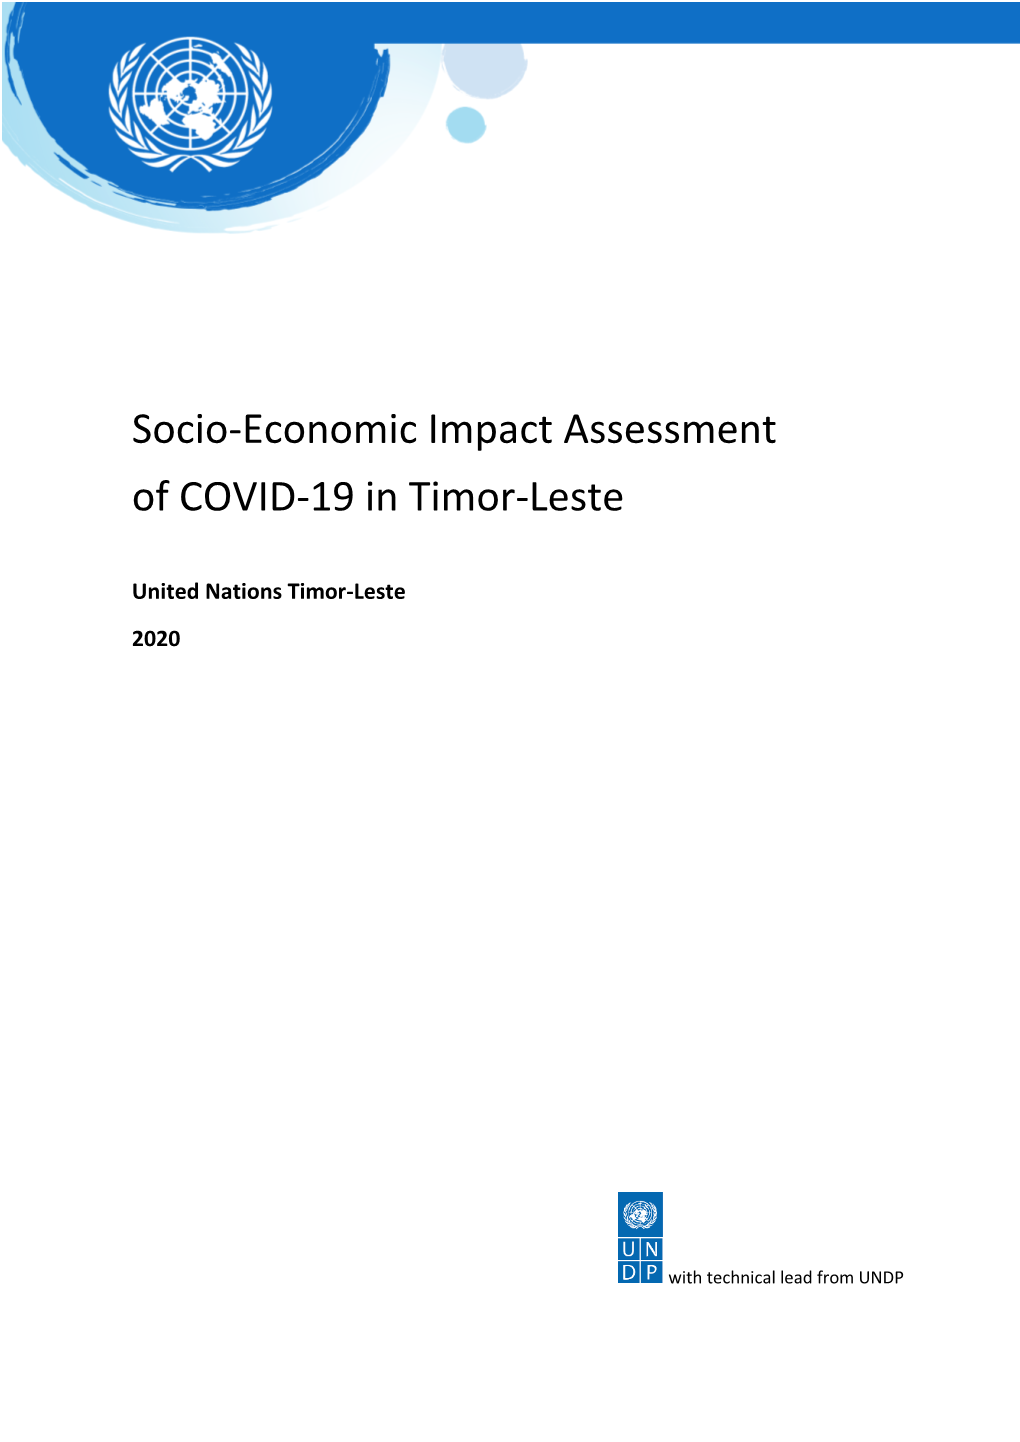 Socio-Economic Impact Assessment of COVID-19 in Timor-Leste